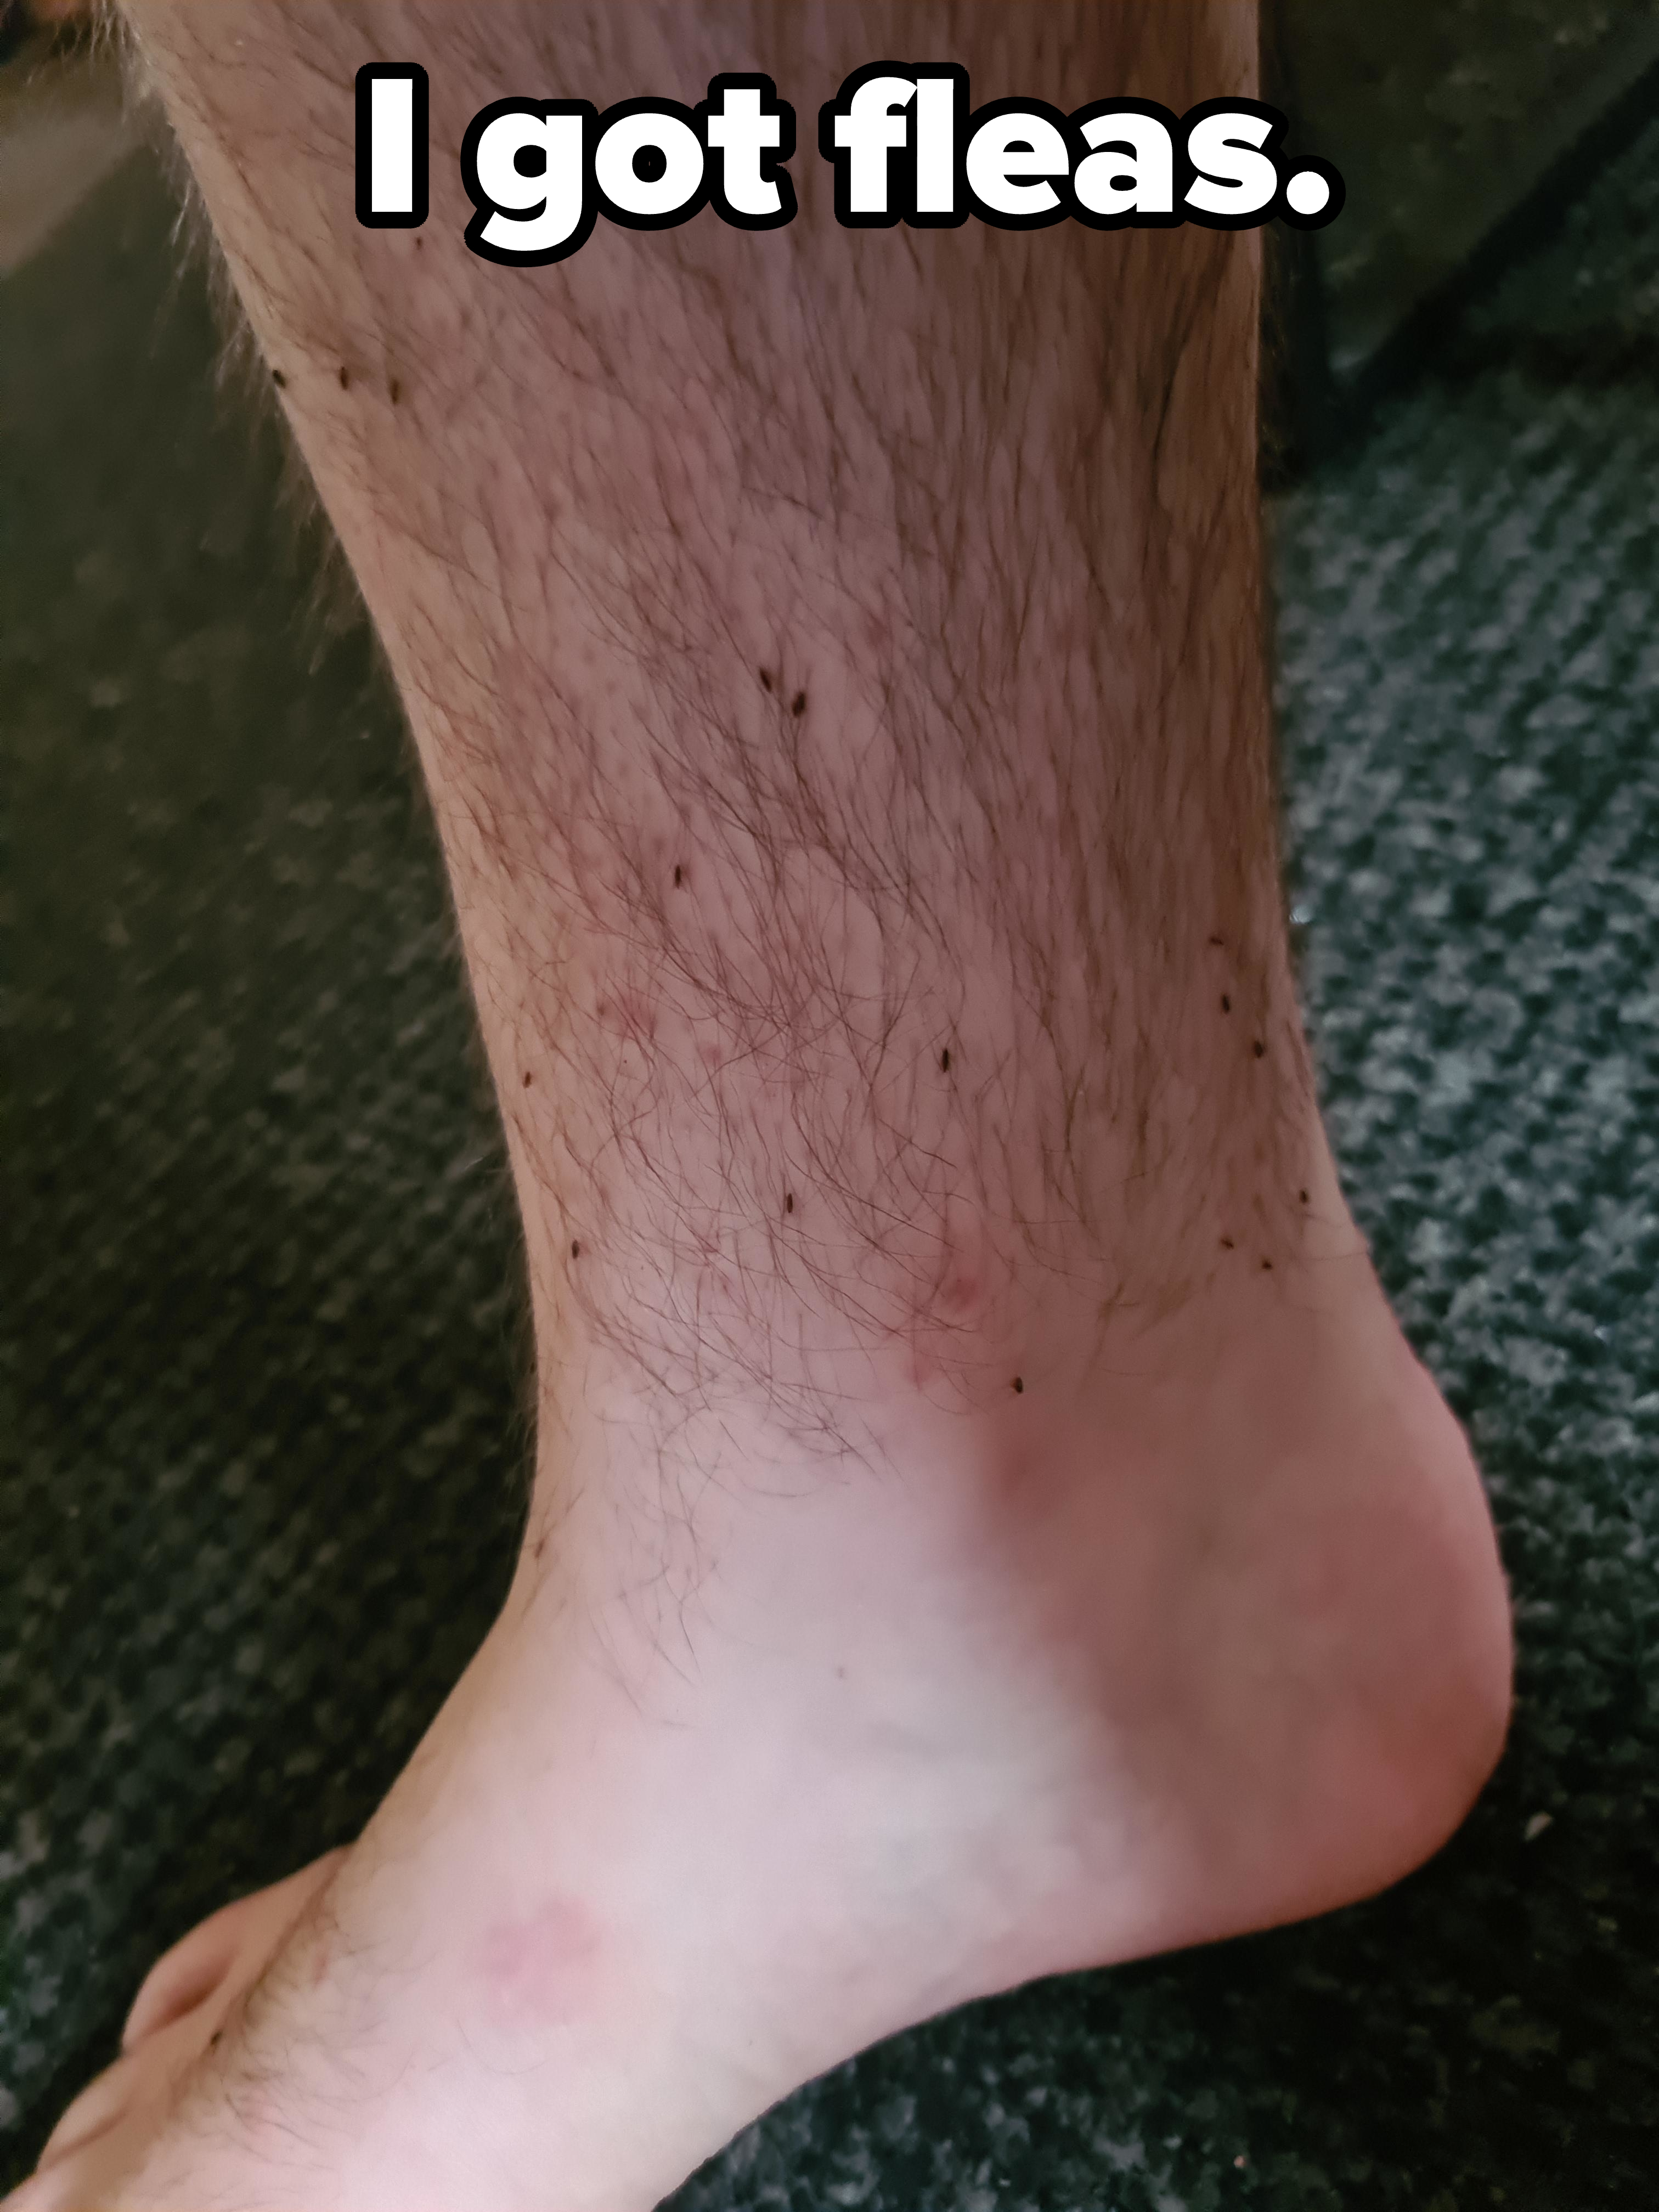 A bare hairy leg with fleas